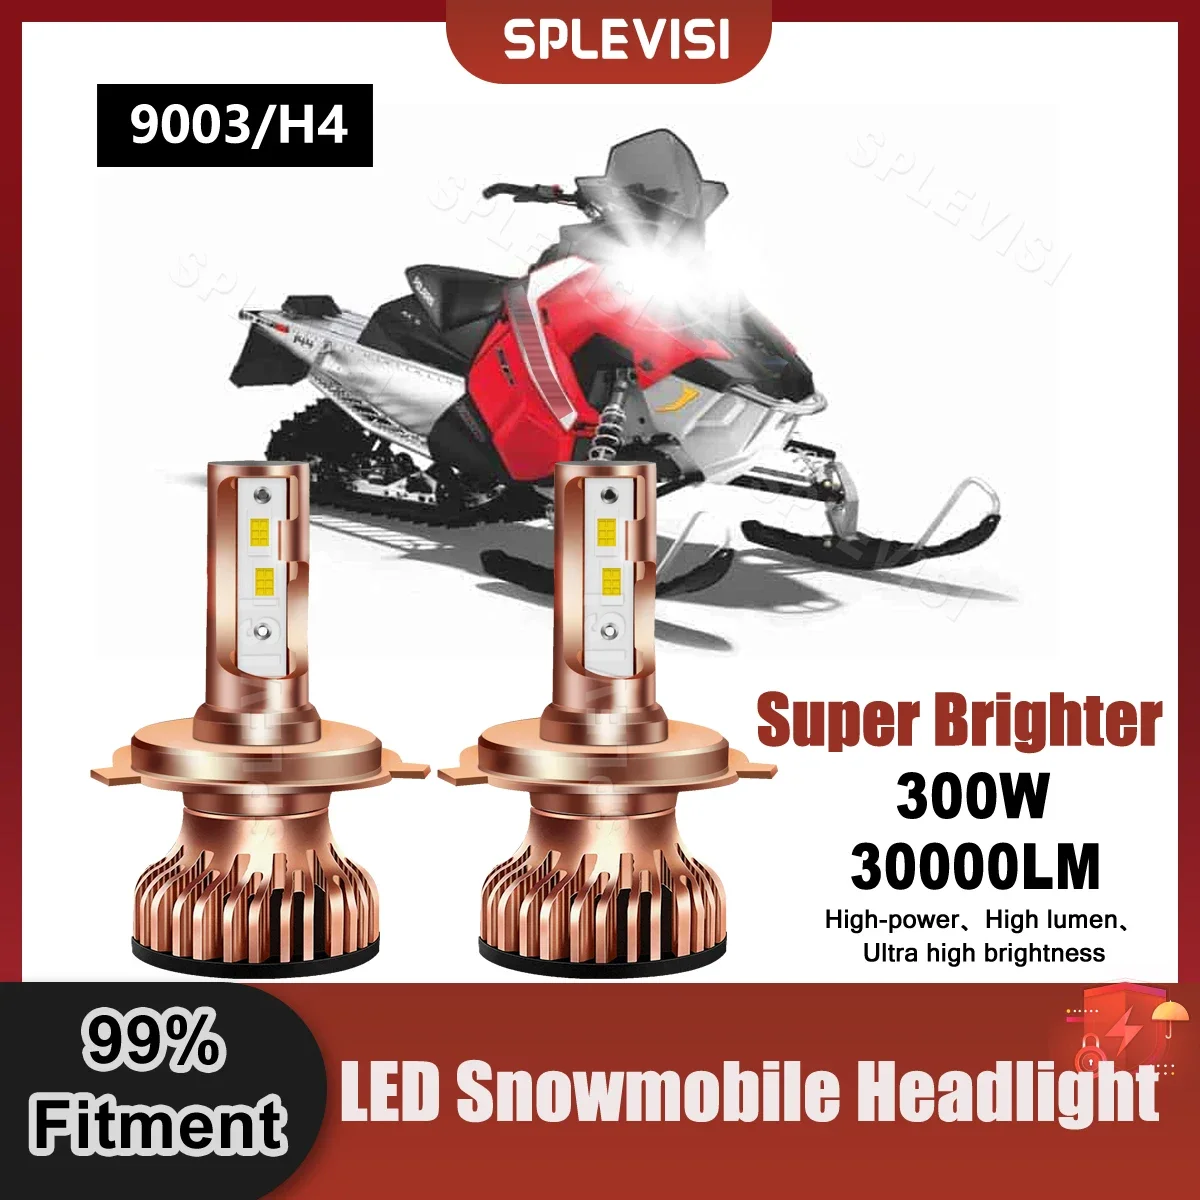 SPLEVISI LED Headlight Bulbs 6000K Pure White 300W For Polaris Switch Back 800 2009 2010 2011 2012 2013 2014 Motorcycle Bulbs winard 1570 300w